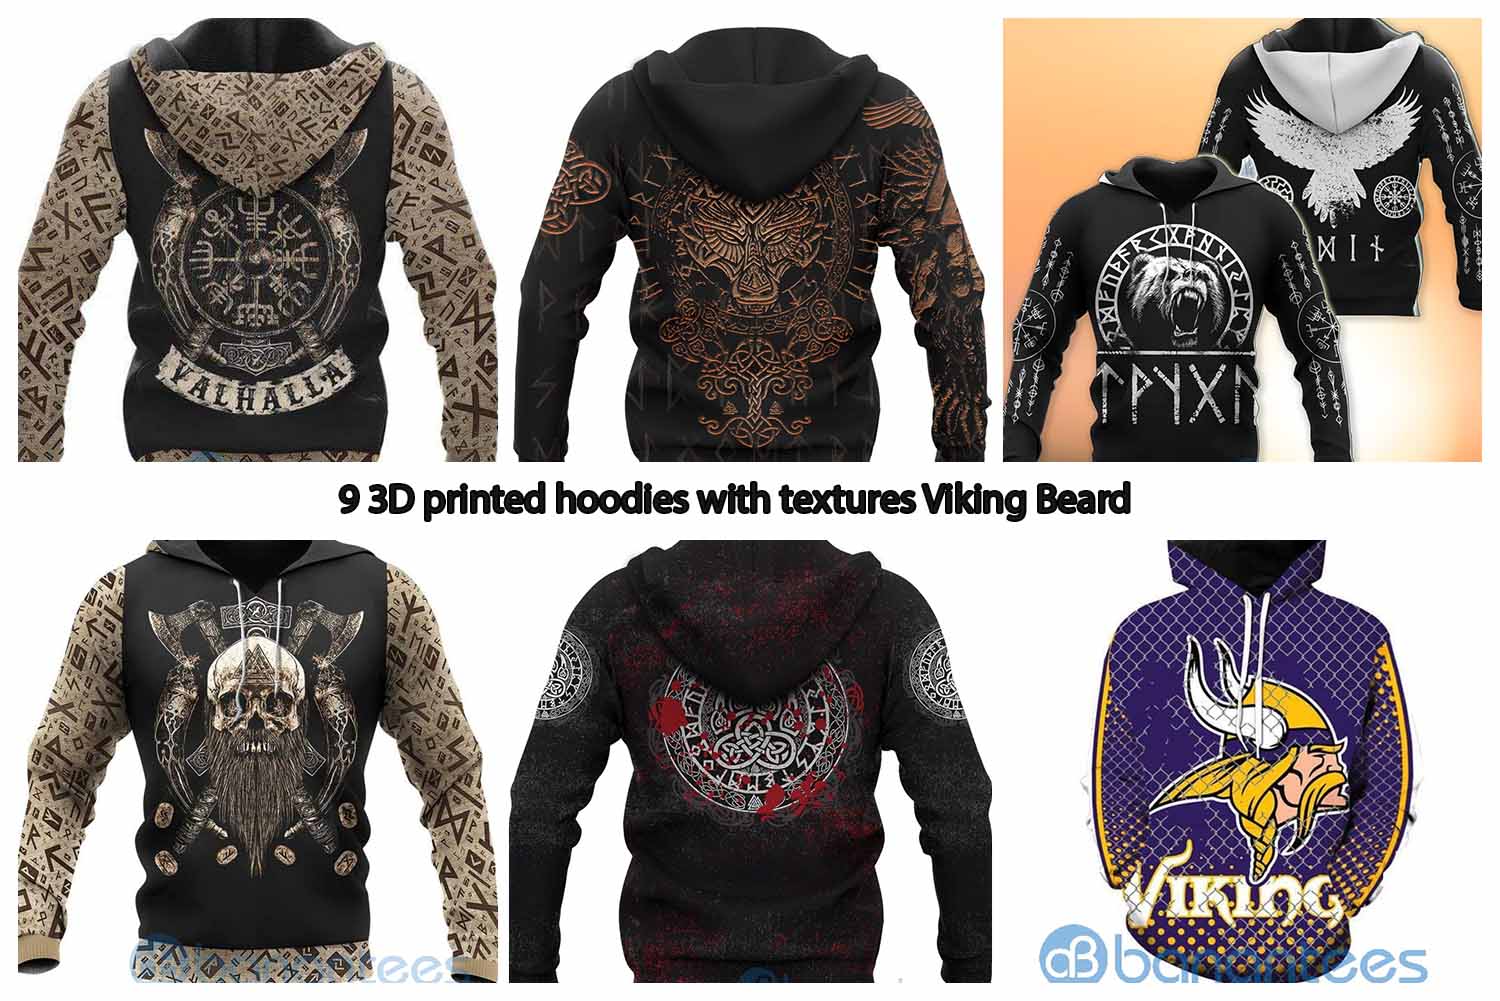 9 3D printed hoodies with textures Viking Beard